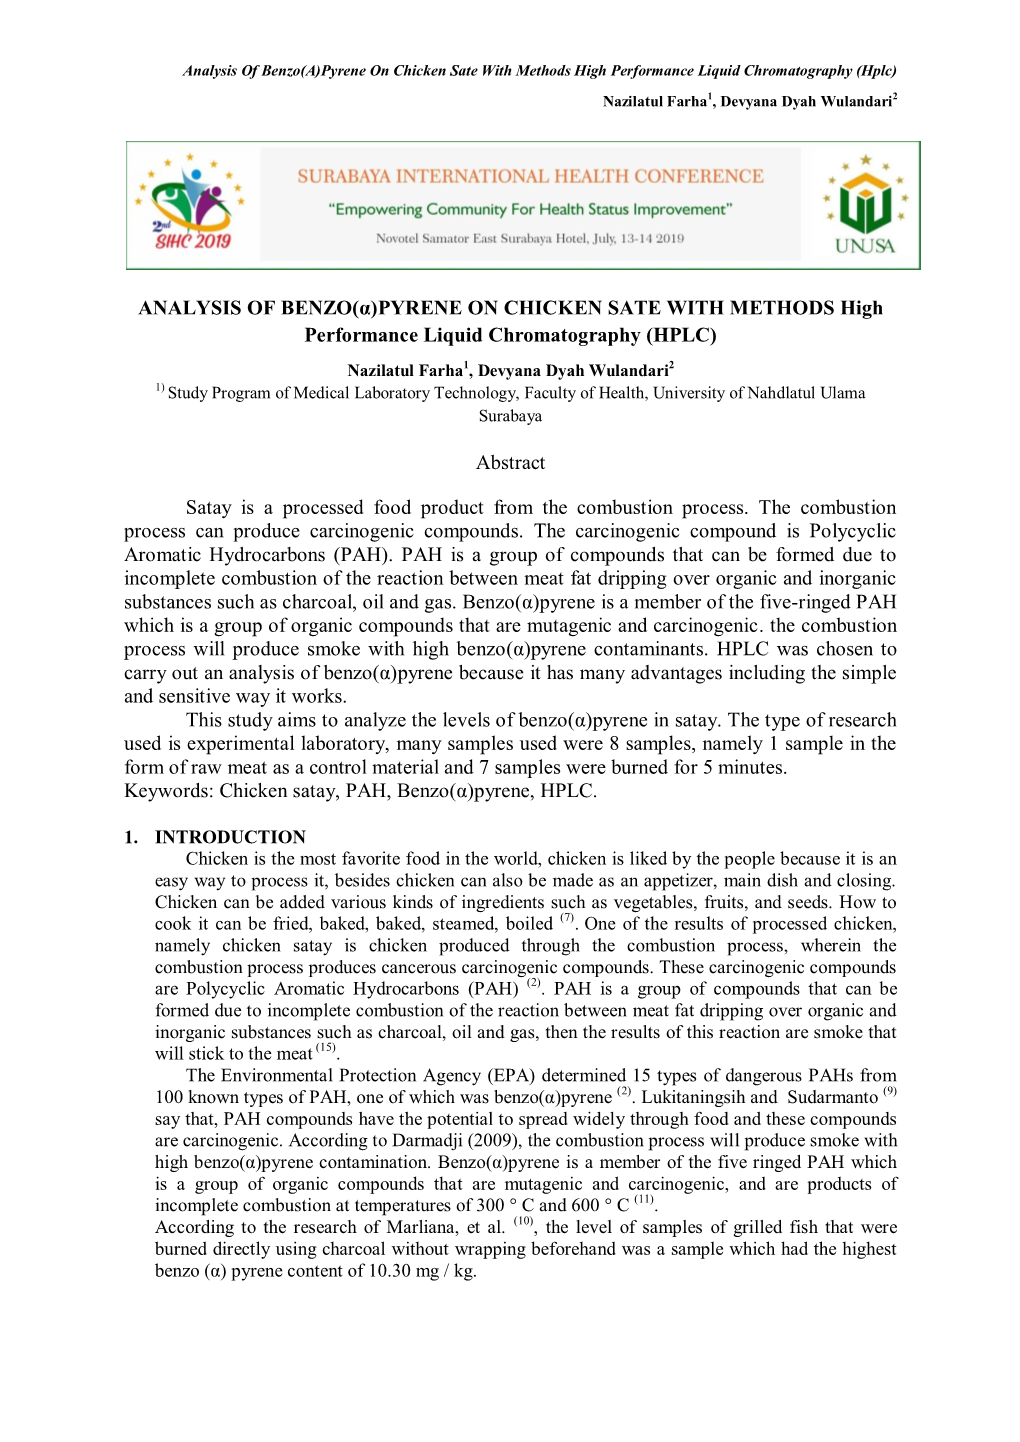 Analysis of Benzo(Α)Pyrene on Chicken Sate with Methods High Performance Liquid Chromatography (Hplc) Nazilatul Farha1, Devyana Dyah Wulandari2